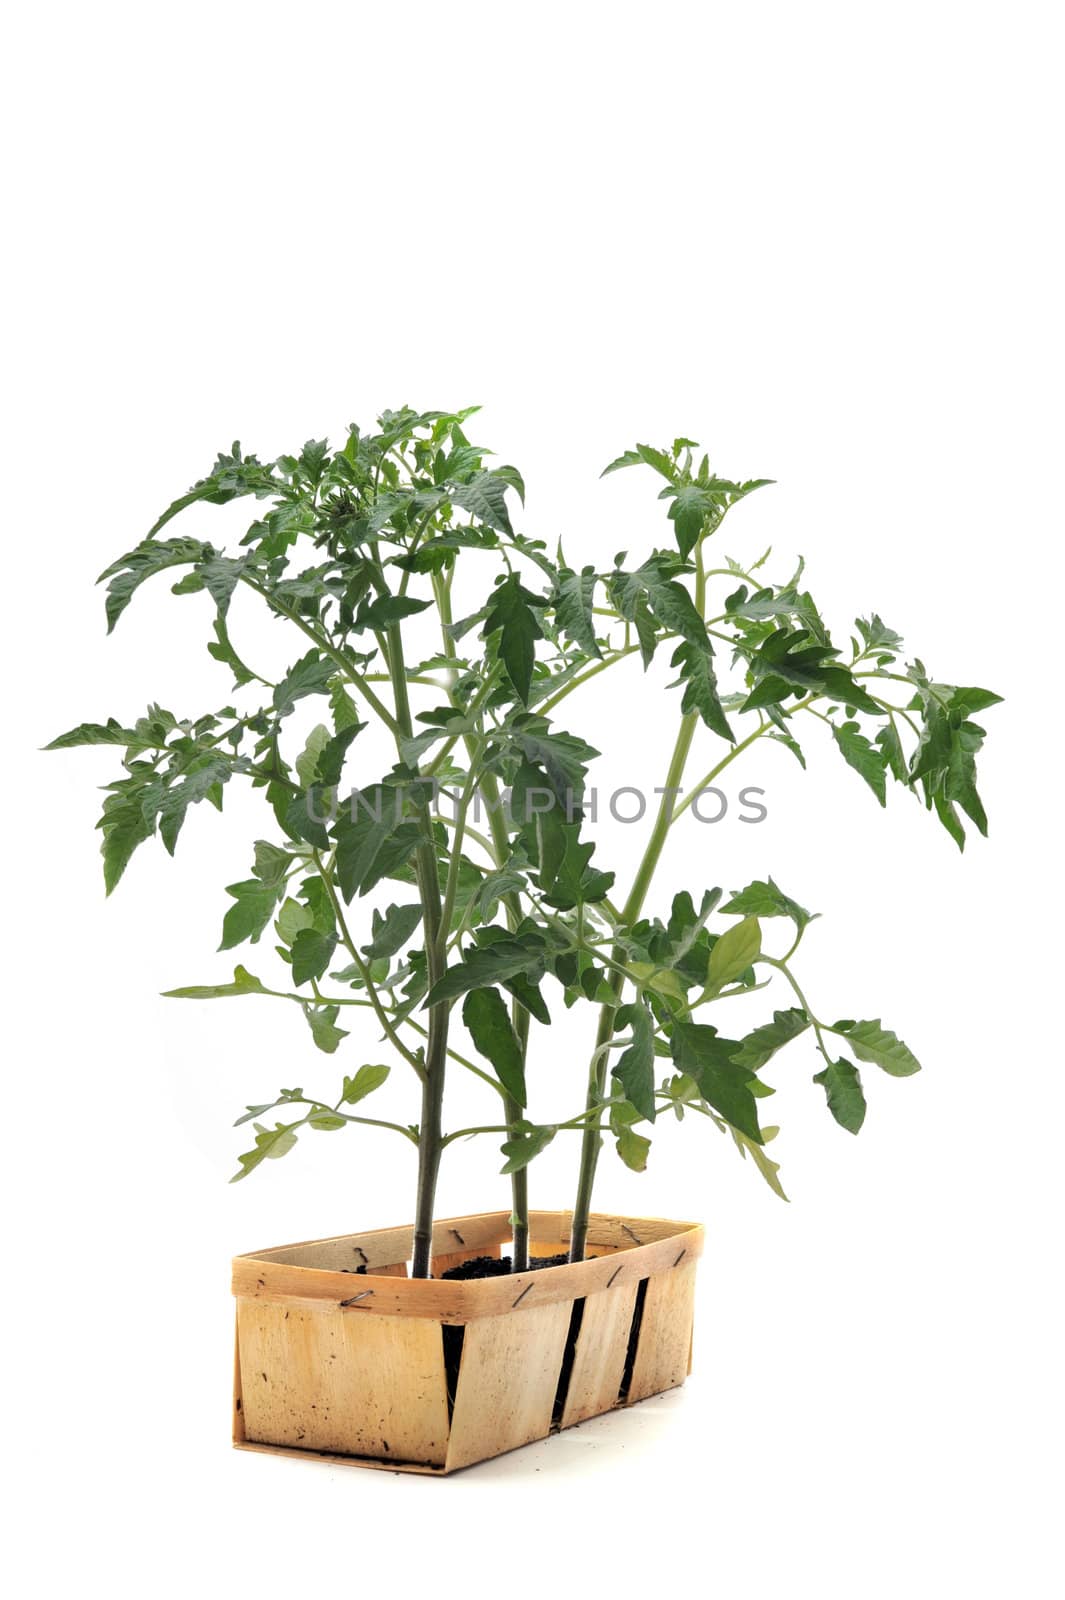 Tomato seedling by cynoclub